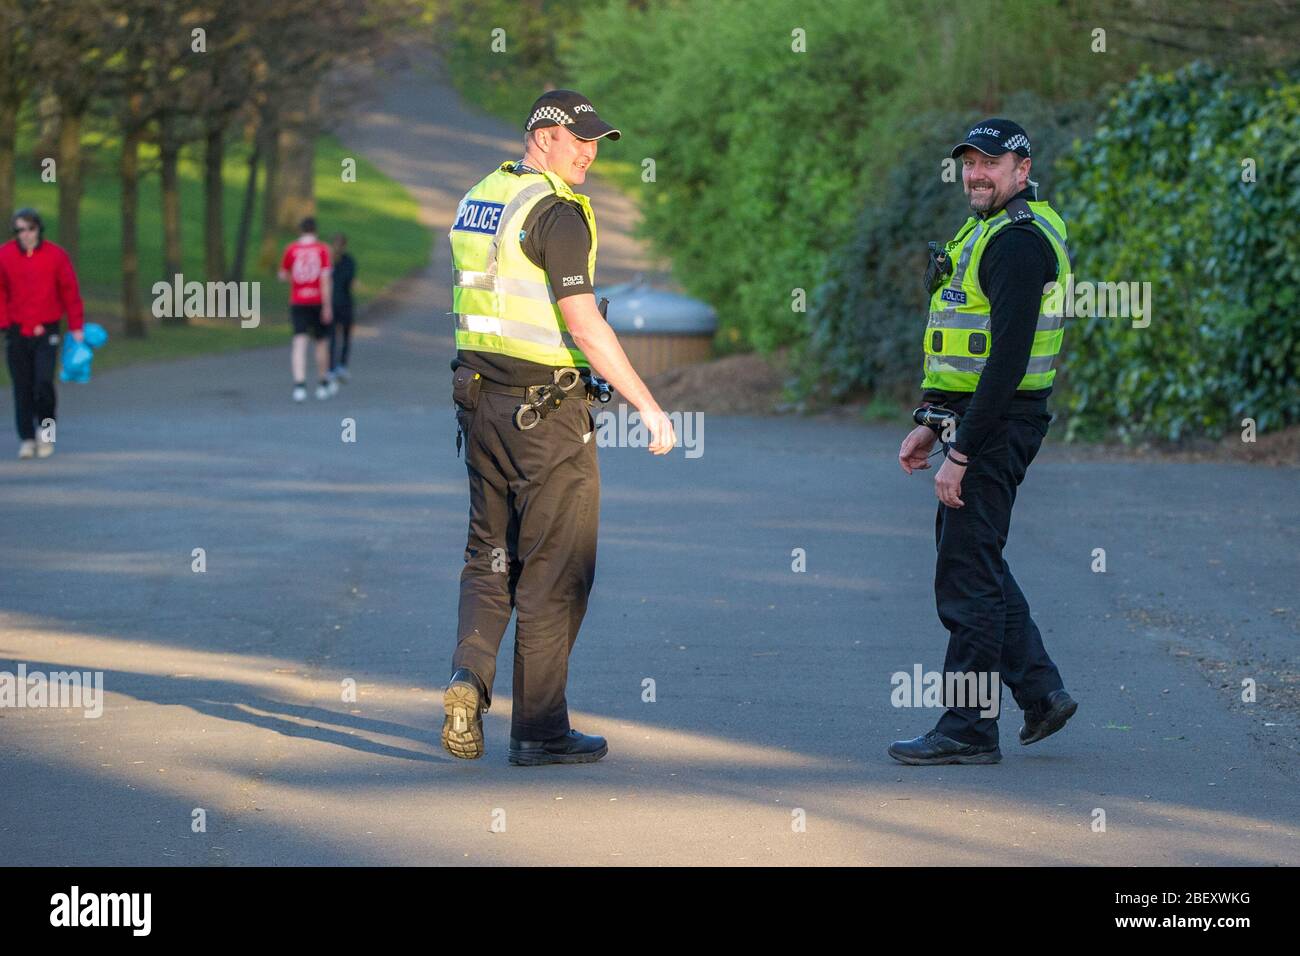 Glasgow UK. 15 April 2019.  Pictured: Police patrol Kelvingrove area of Glasgow during the Coronavirus Lockdown. Credit: Colin Fisher/Alamy Live News. Stock Photo